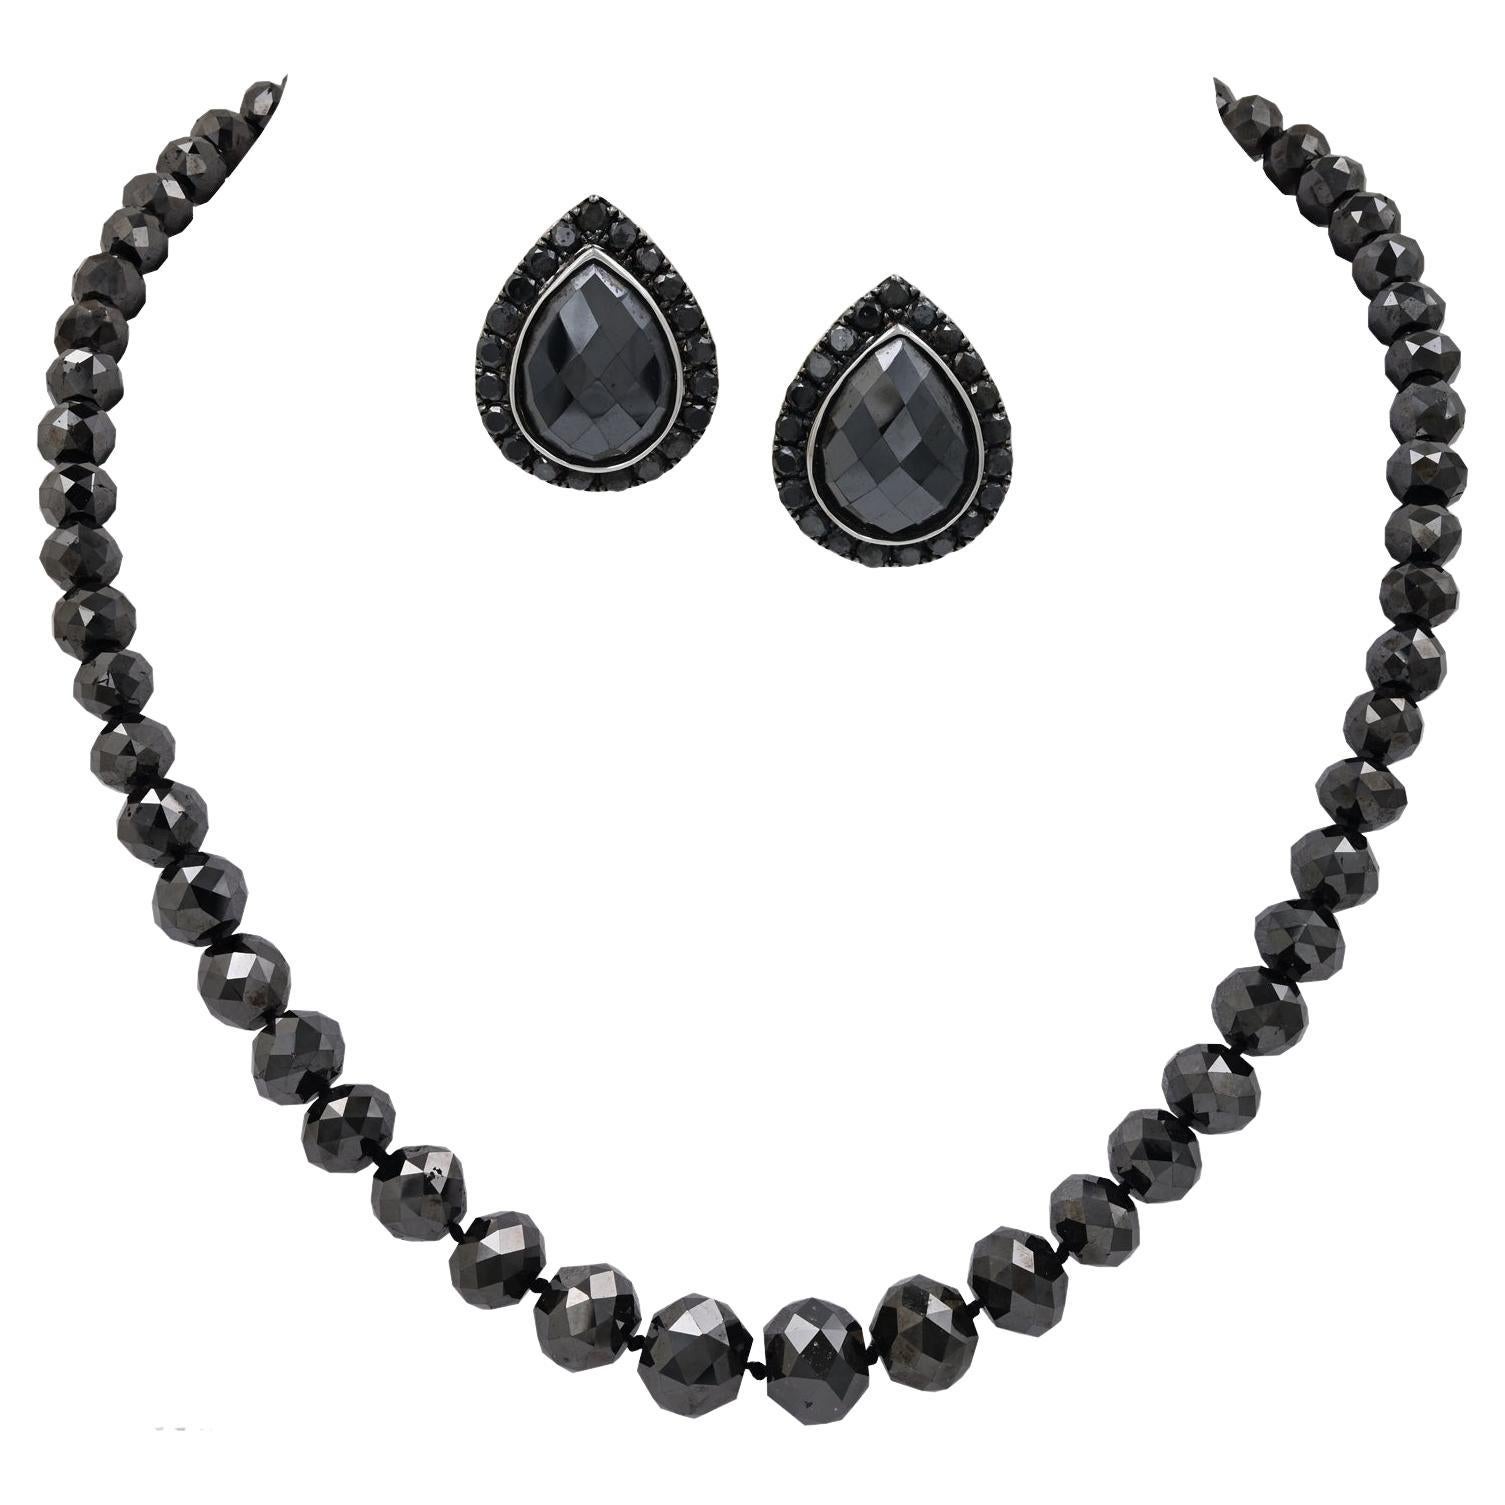 Spectra Fine Jewelry Black Diamond Necklace Earrings Demi Parure Suite